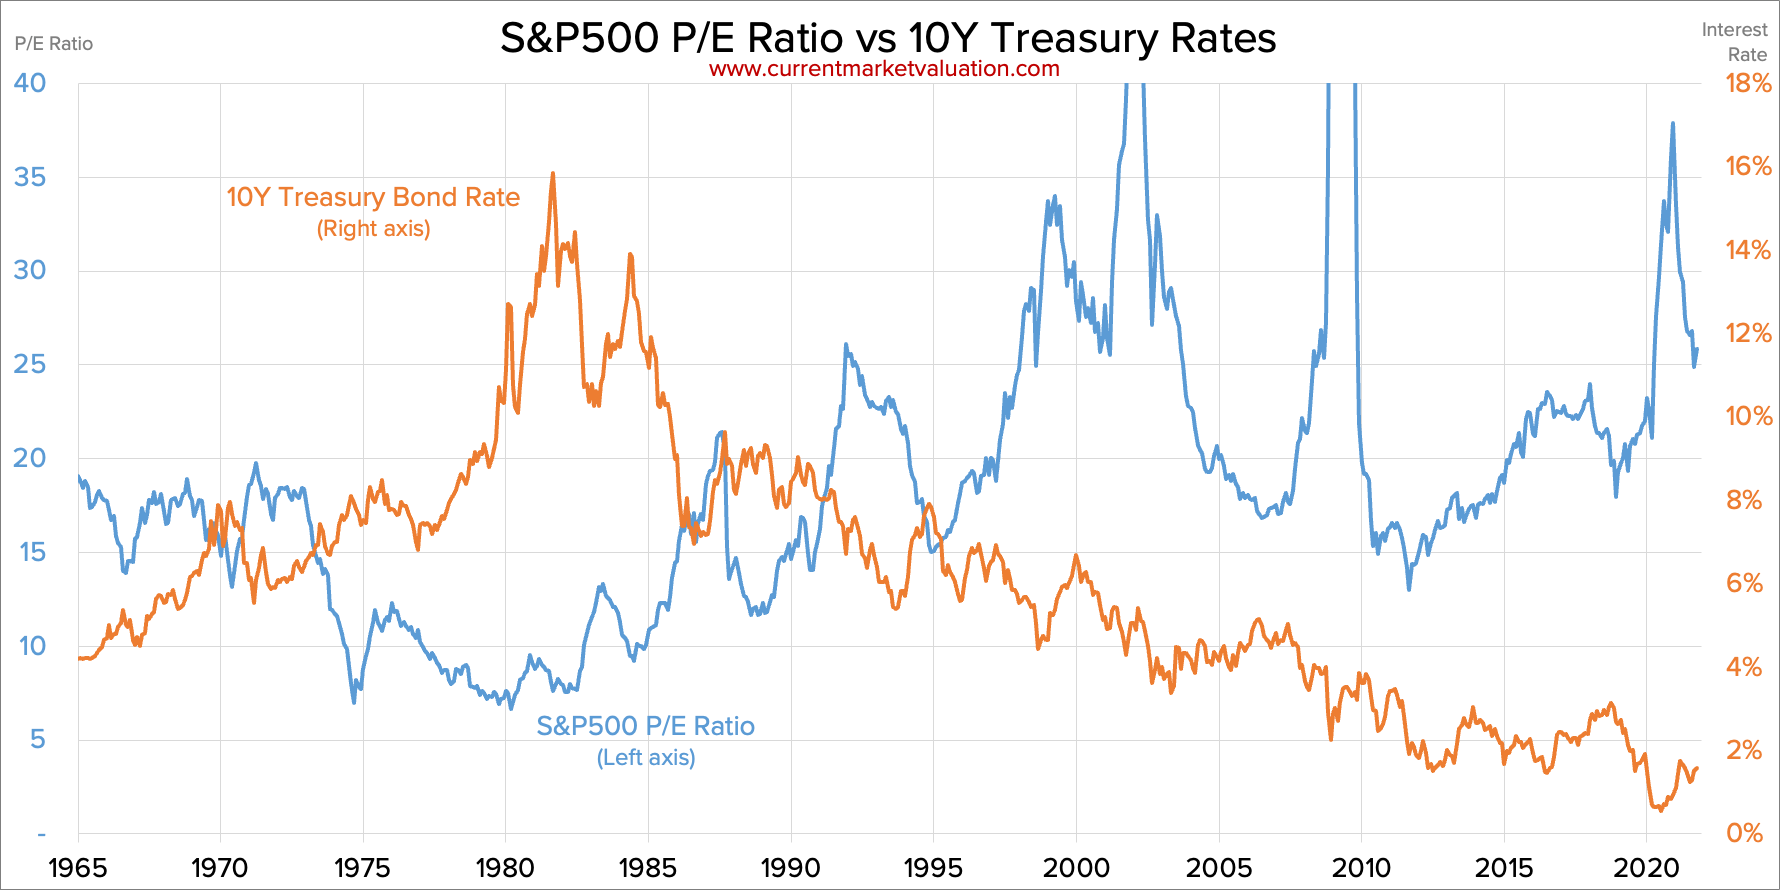 S&P500 P/E Ratio and 10Y Treasury Bond Rates